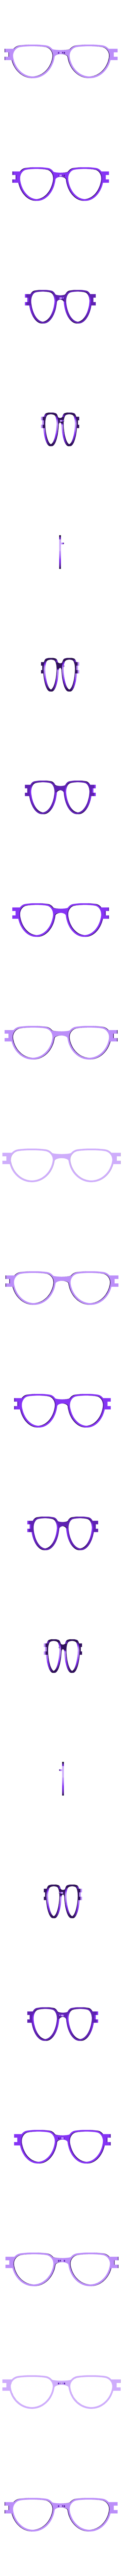 frontglassesframe.stl Download free STL file Fake Glasses Disguise (Halloween) • 3D printable object, PentlandDesigns